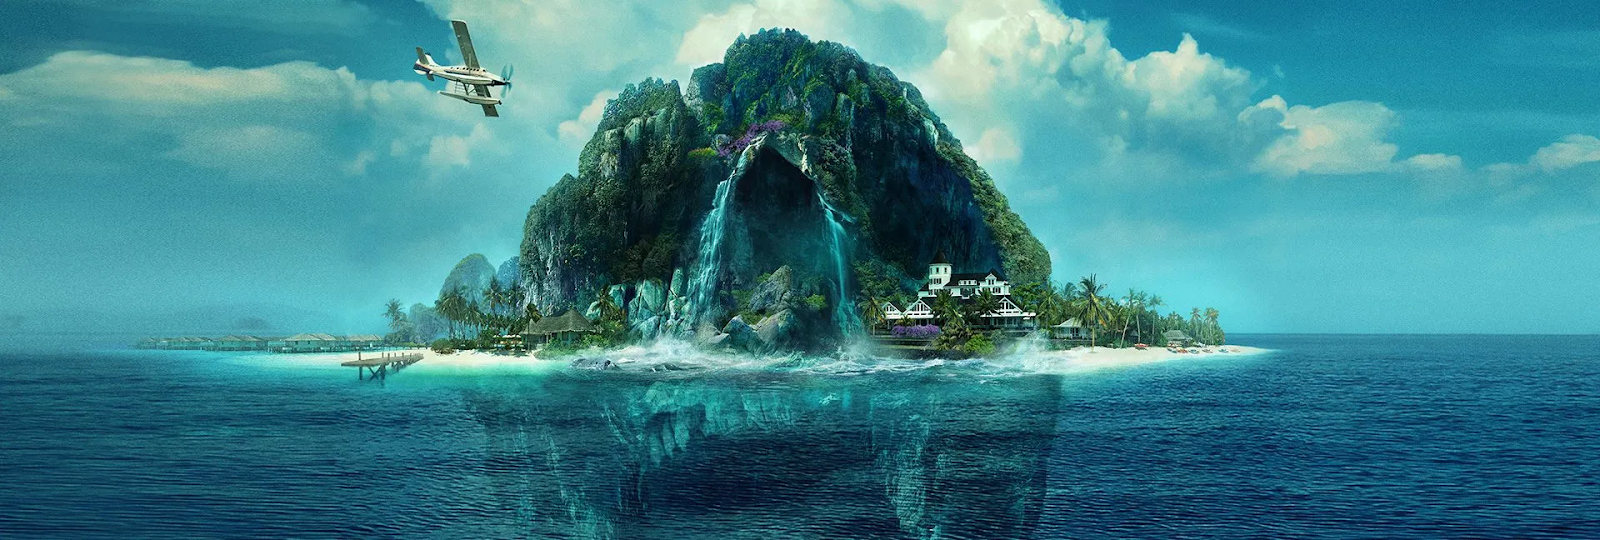 Fantasy Island  By KUBET